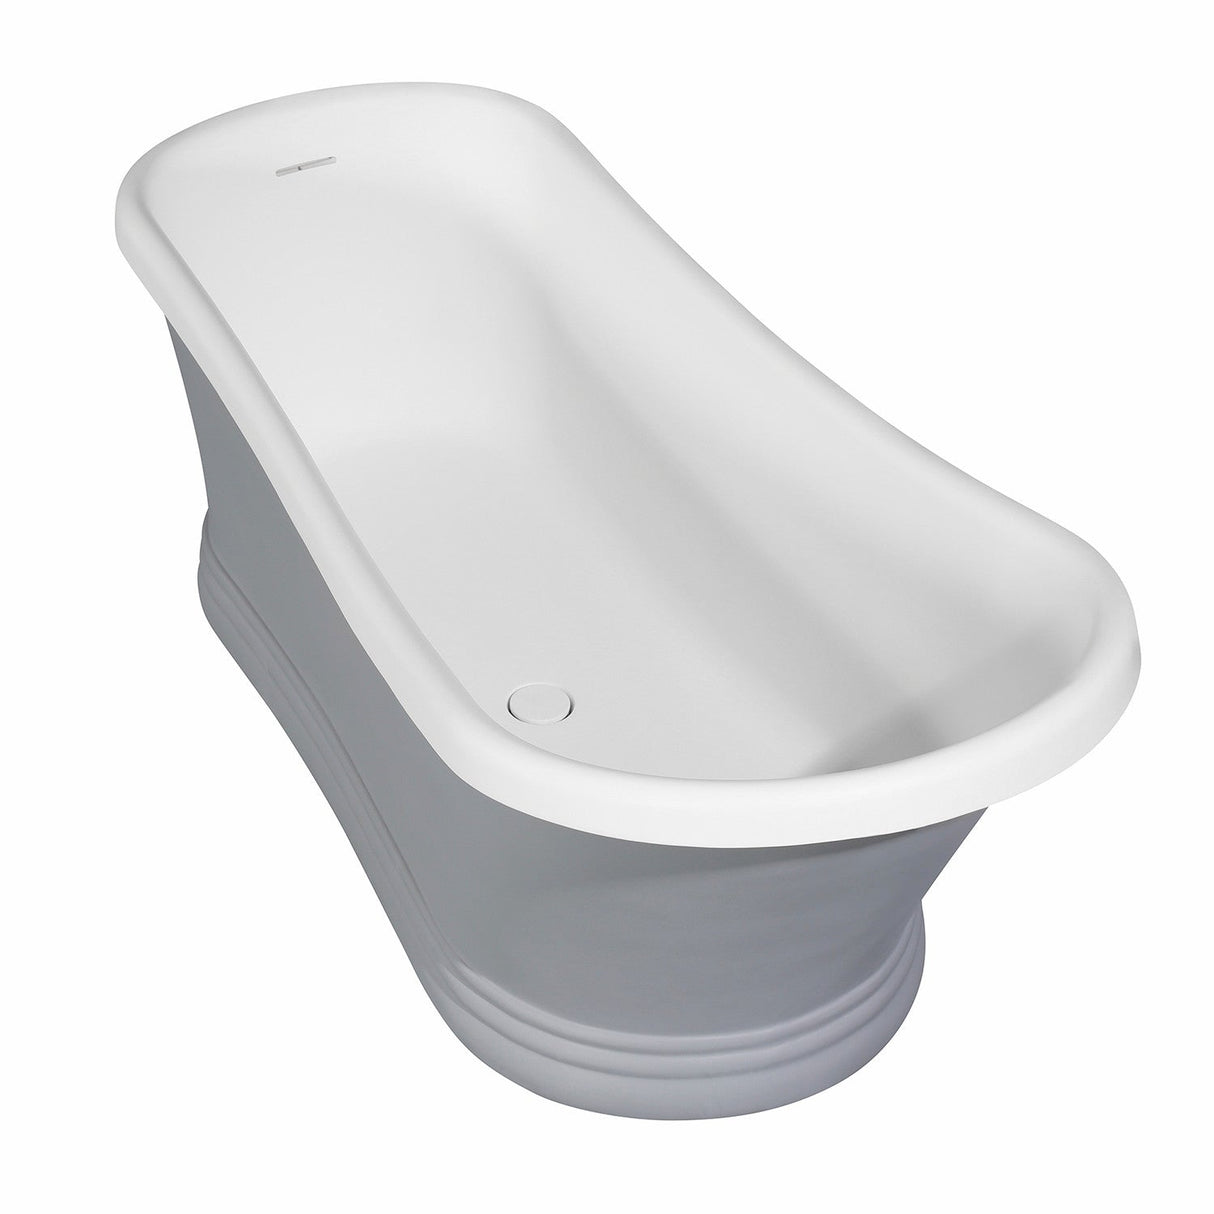 Arcticstone VRTSS673026WG 68-Inch Slipper Solid Surface Pedestal Tub with Drain, Glossy White/Matte Gray